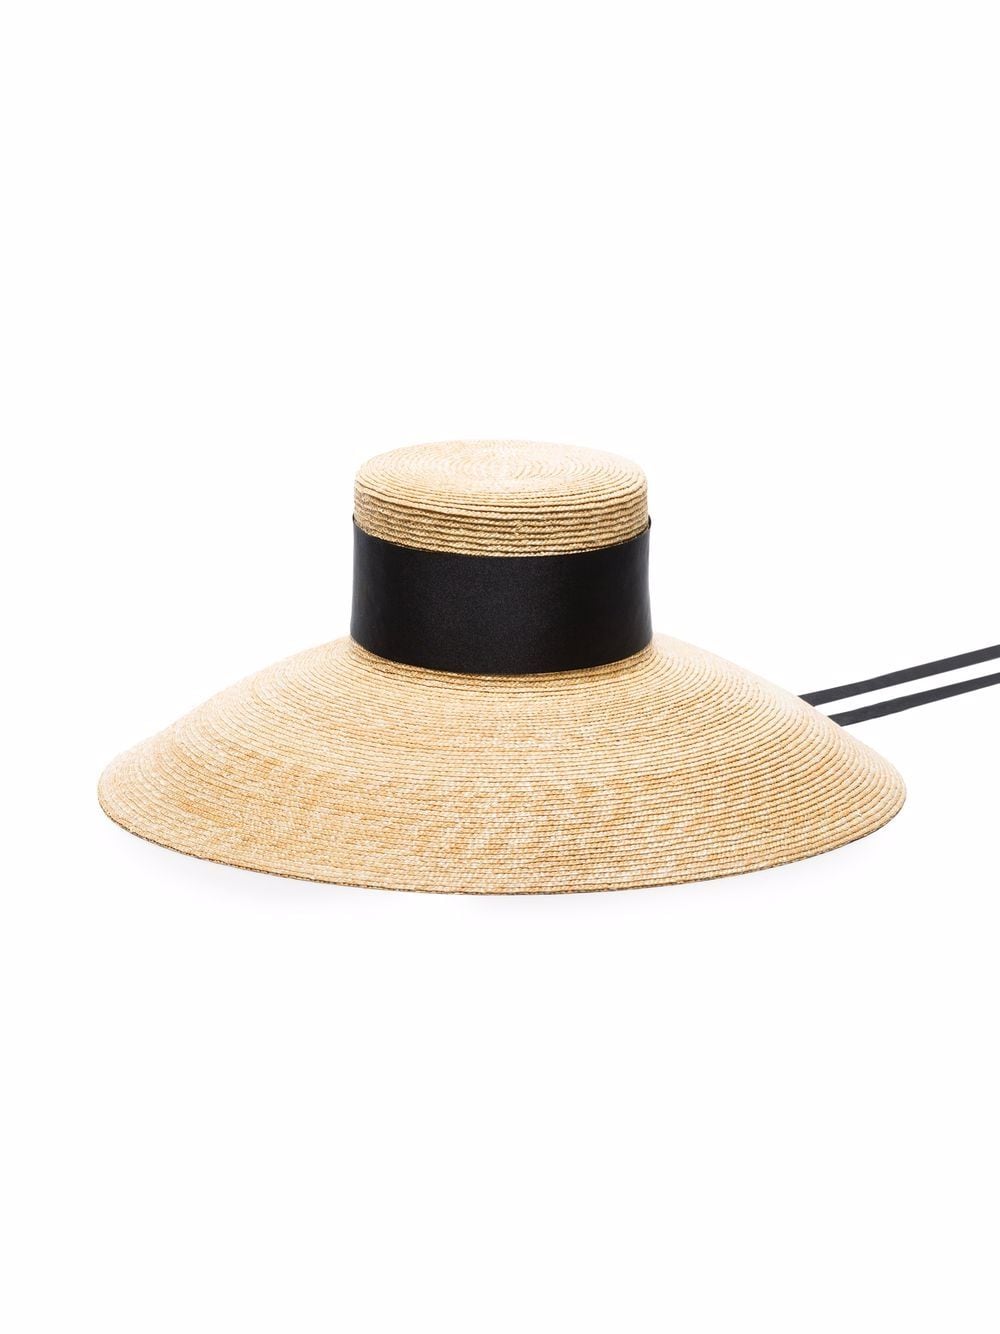 ELIURPI - Capelina straw sun hat - women - Straw - One Size - Neutrals